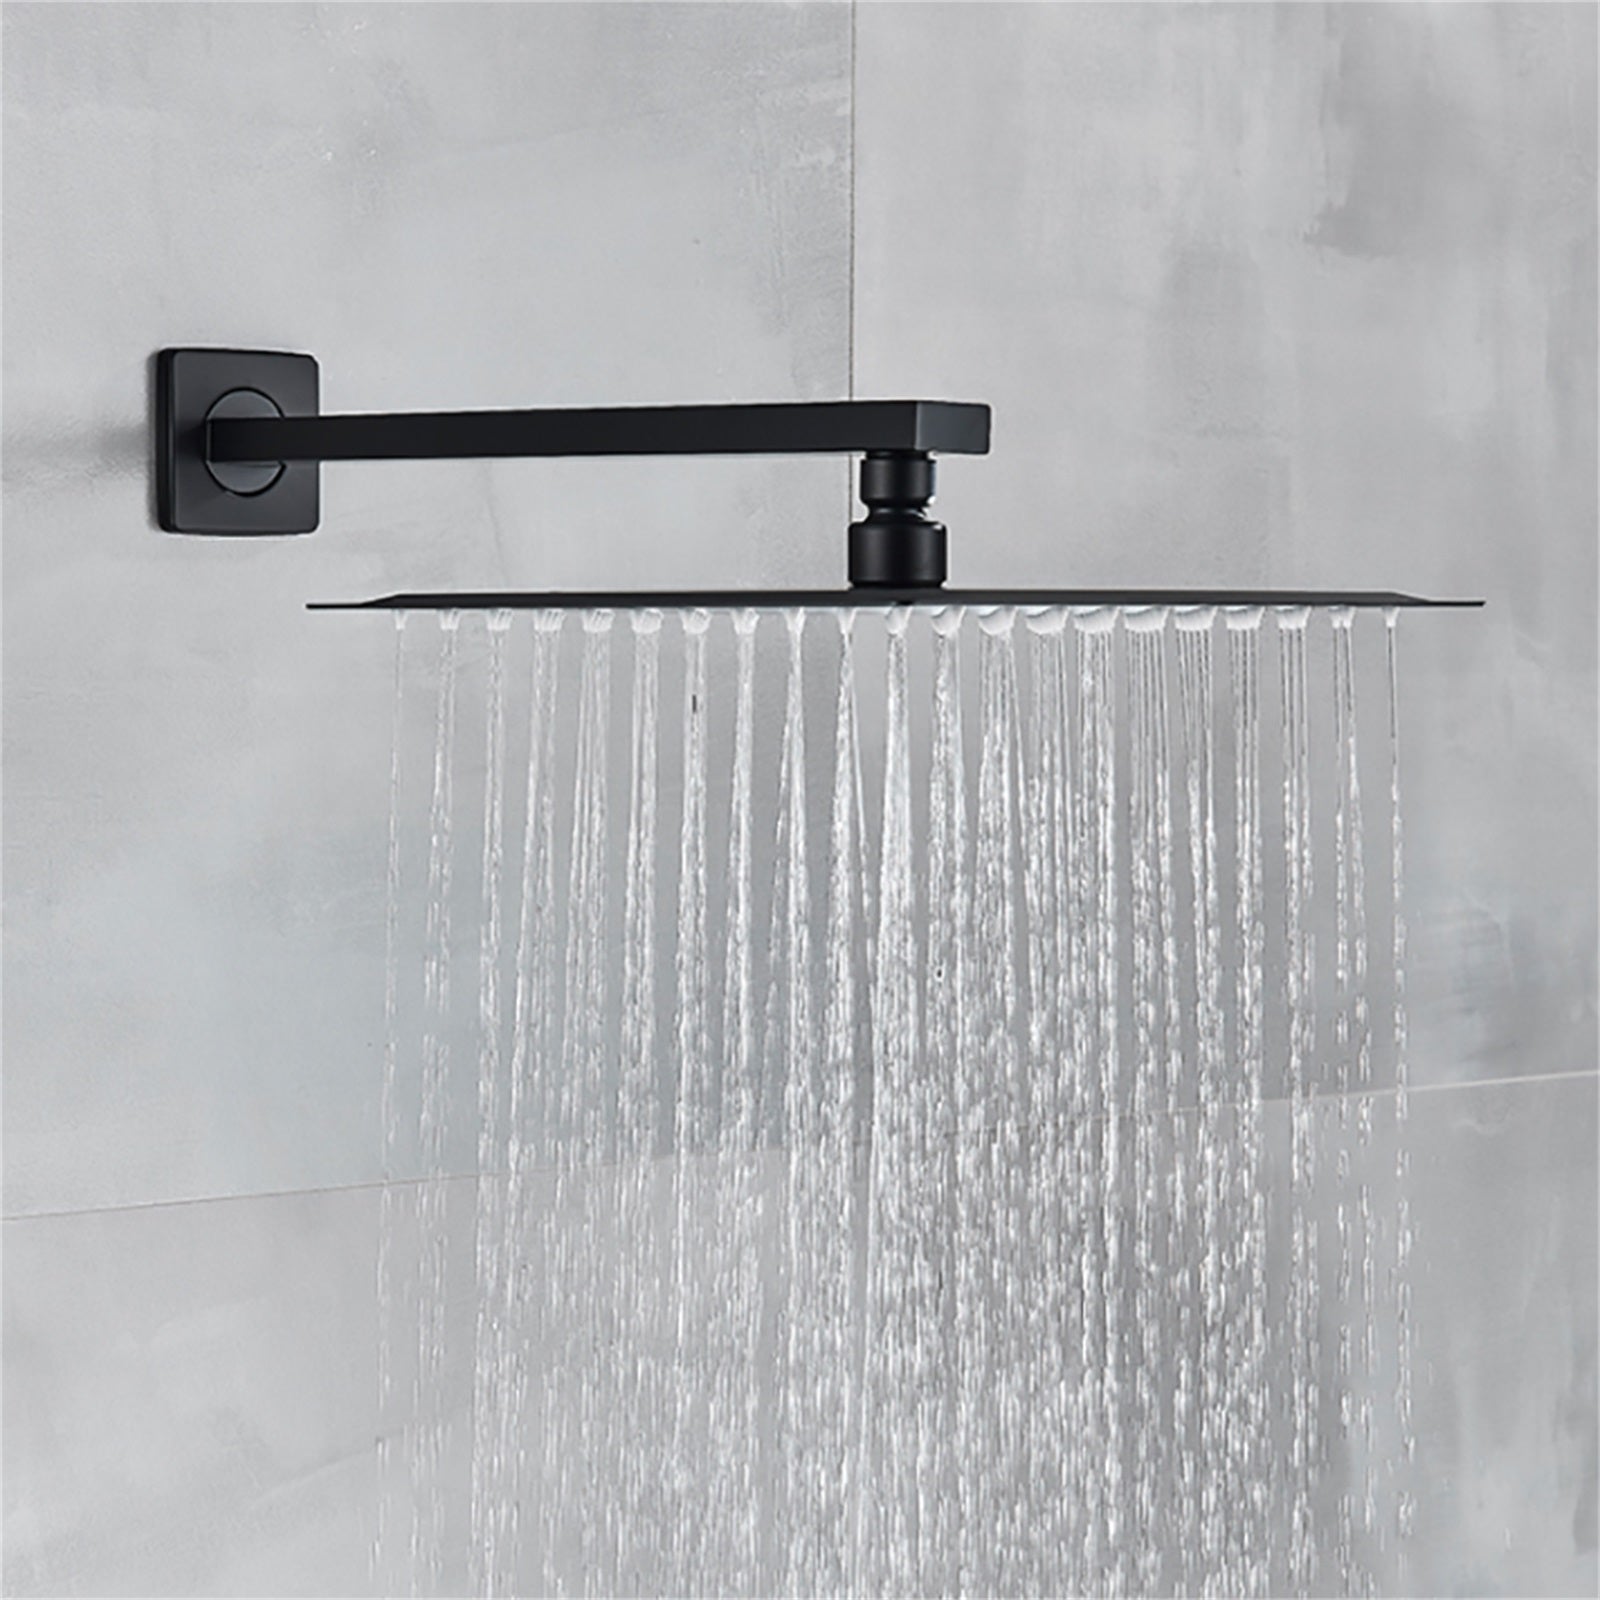 Set di rubinetti per doccia da 30 cm